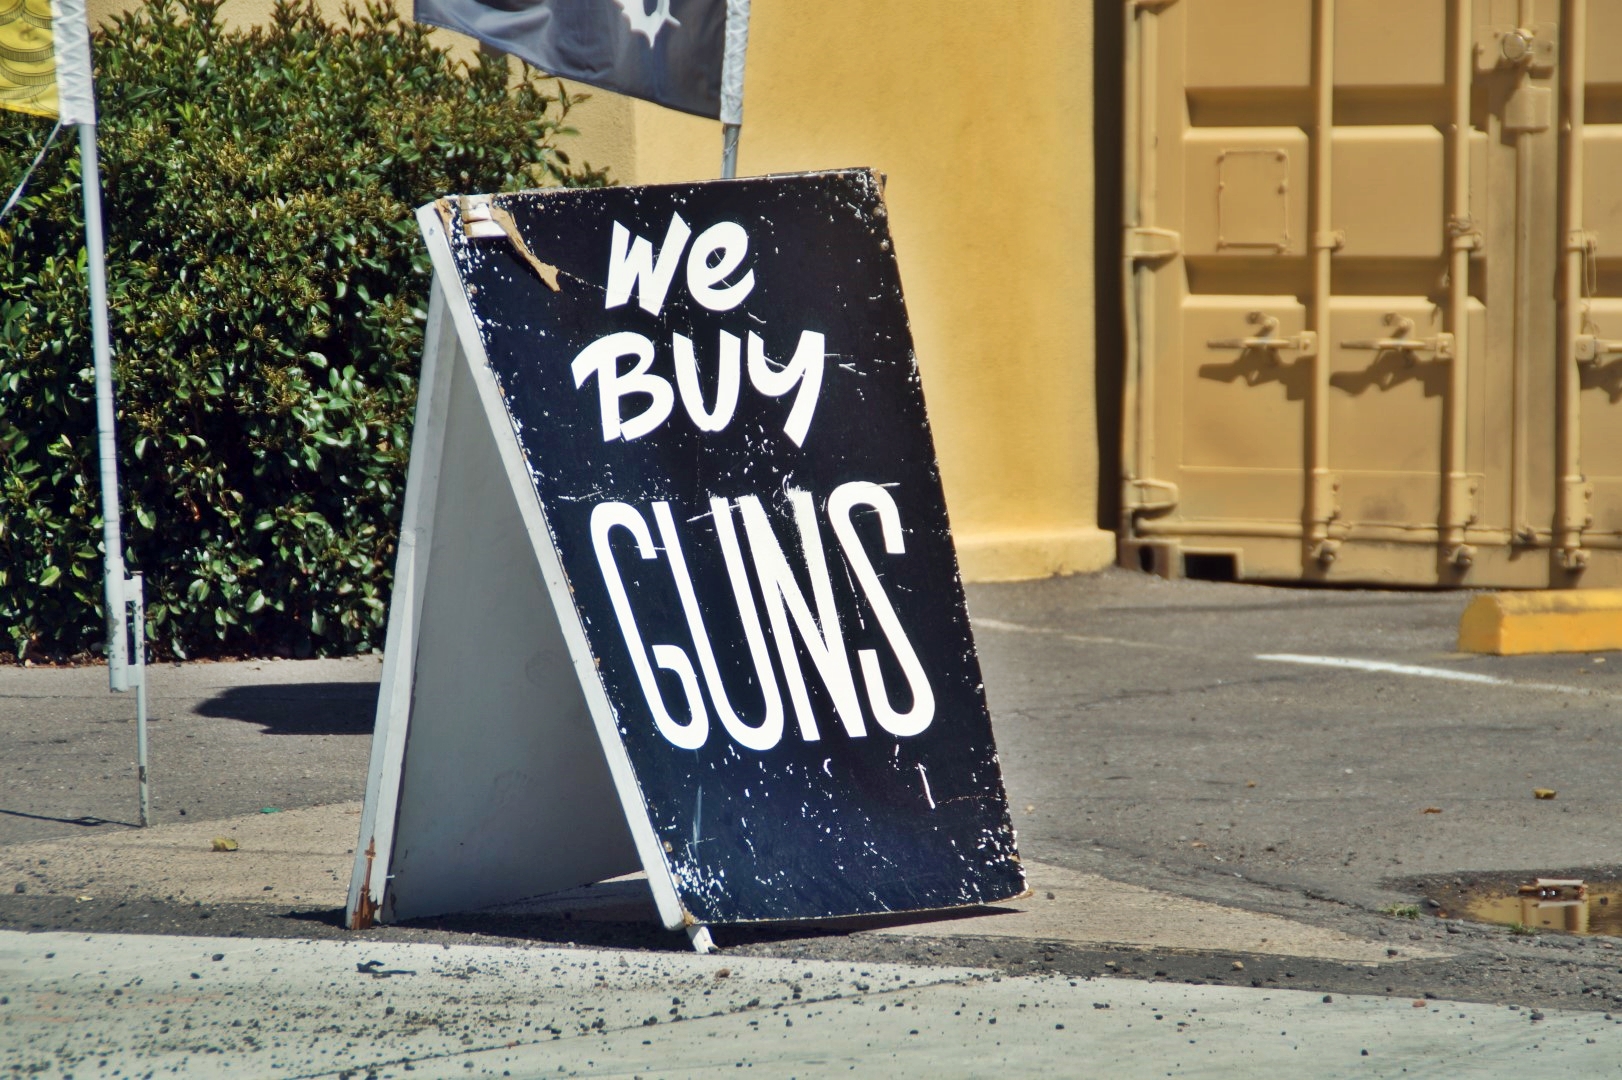 This shop buys guns